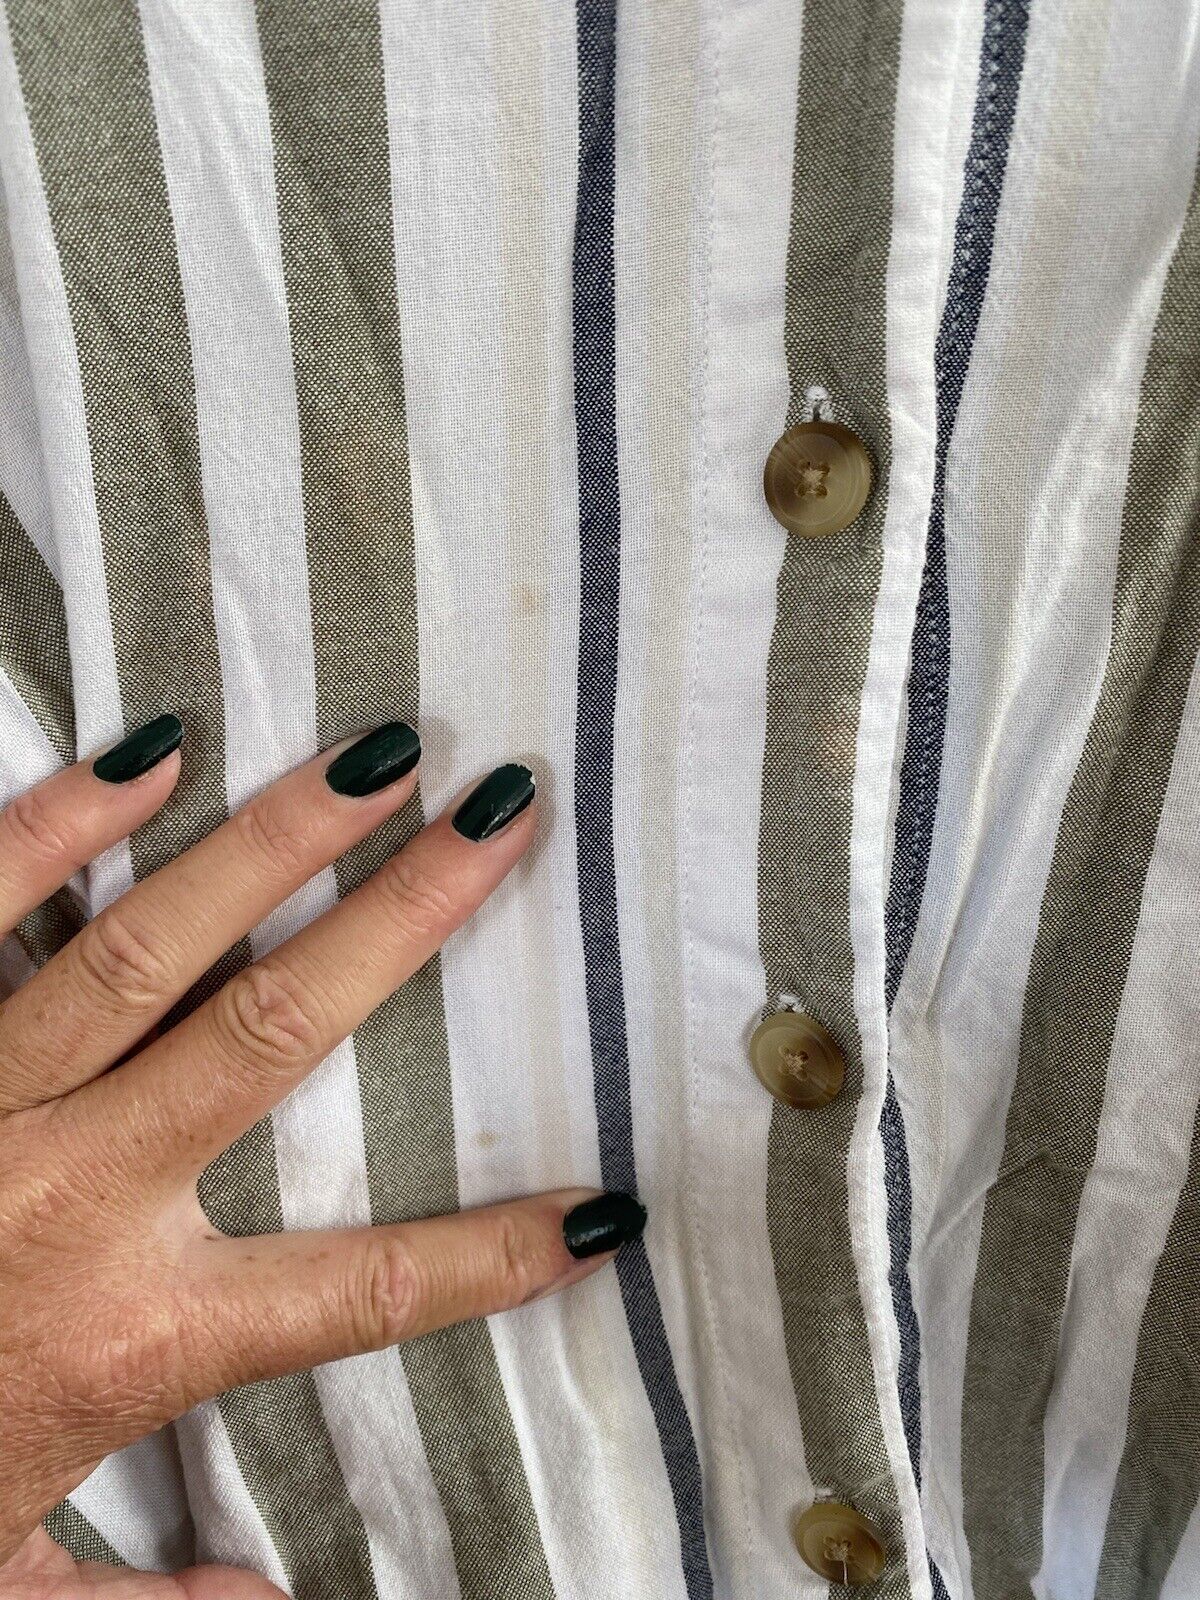 Vintage Stripe Linen Button Down Shirt - Unbranded - Women's XL